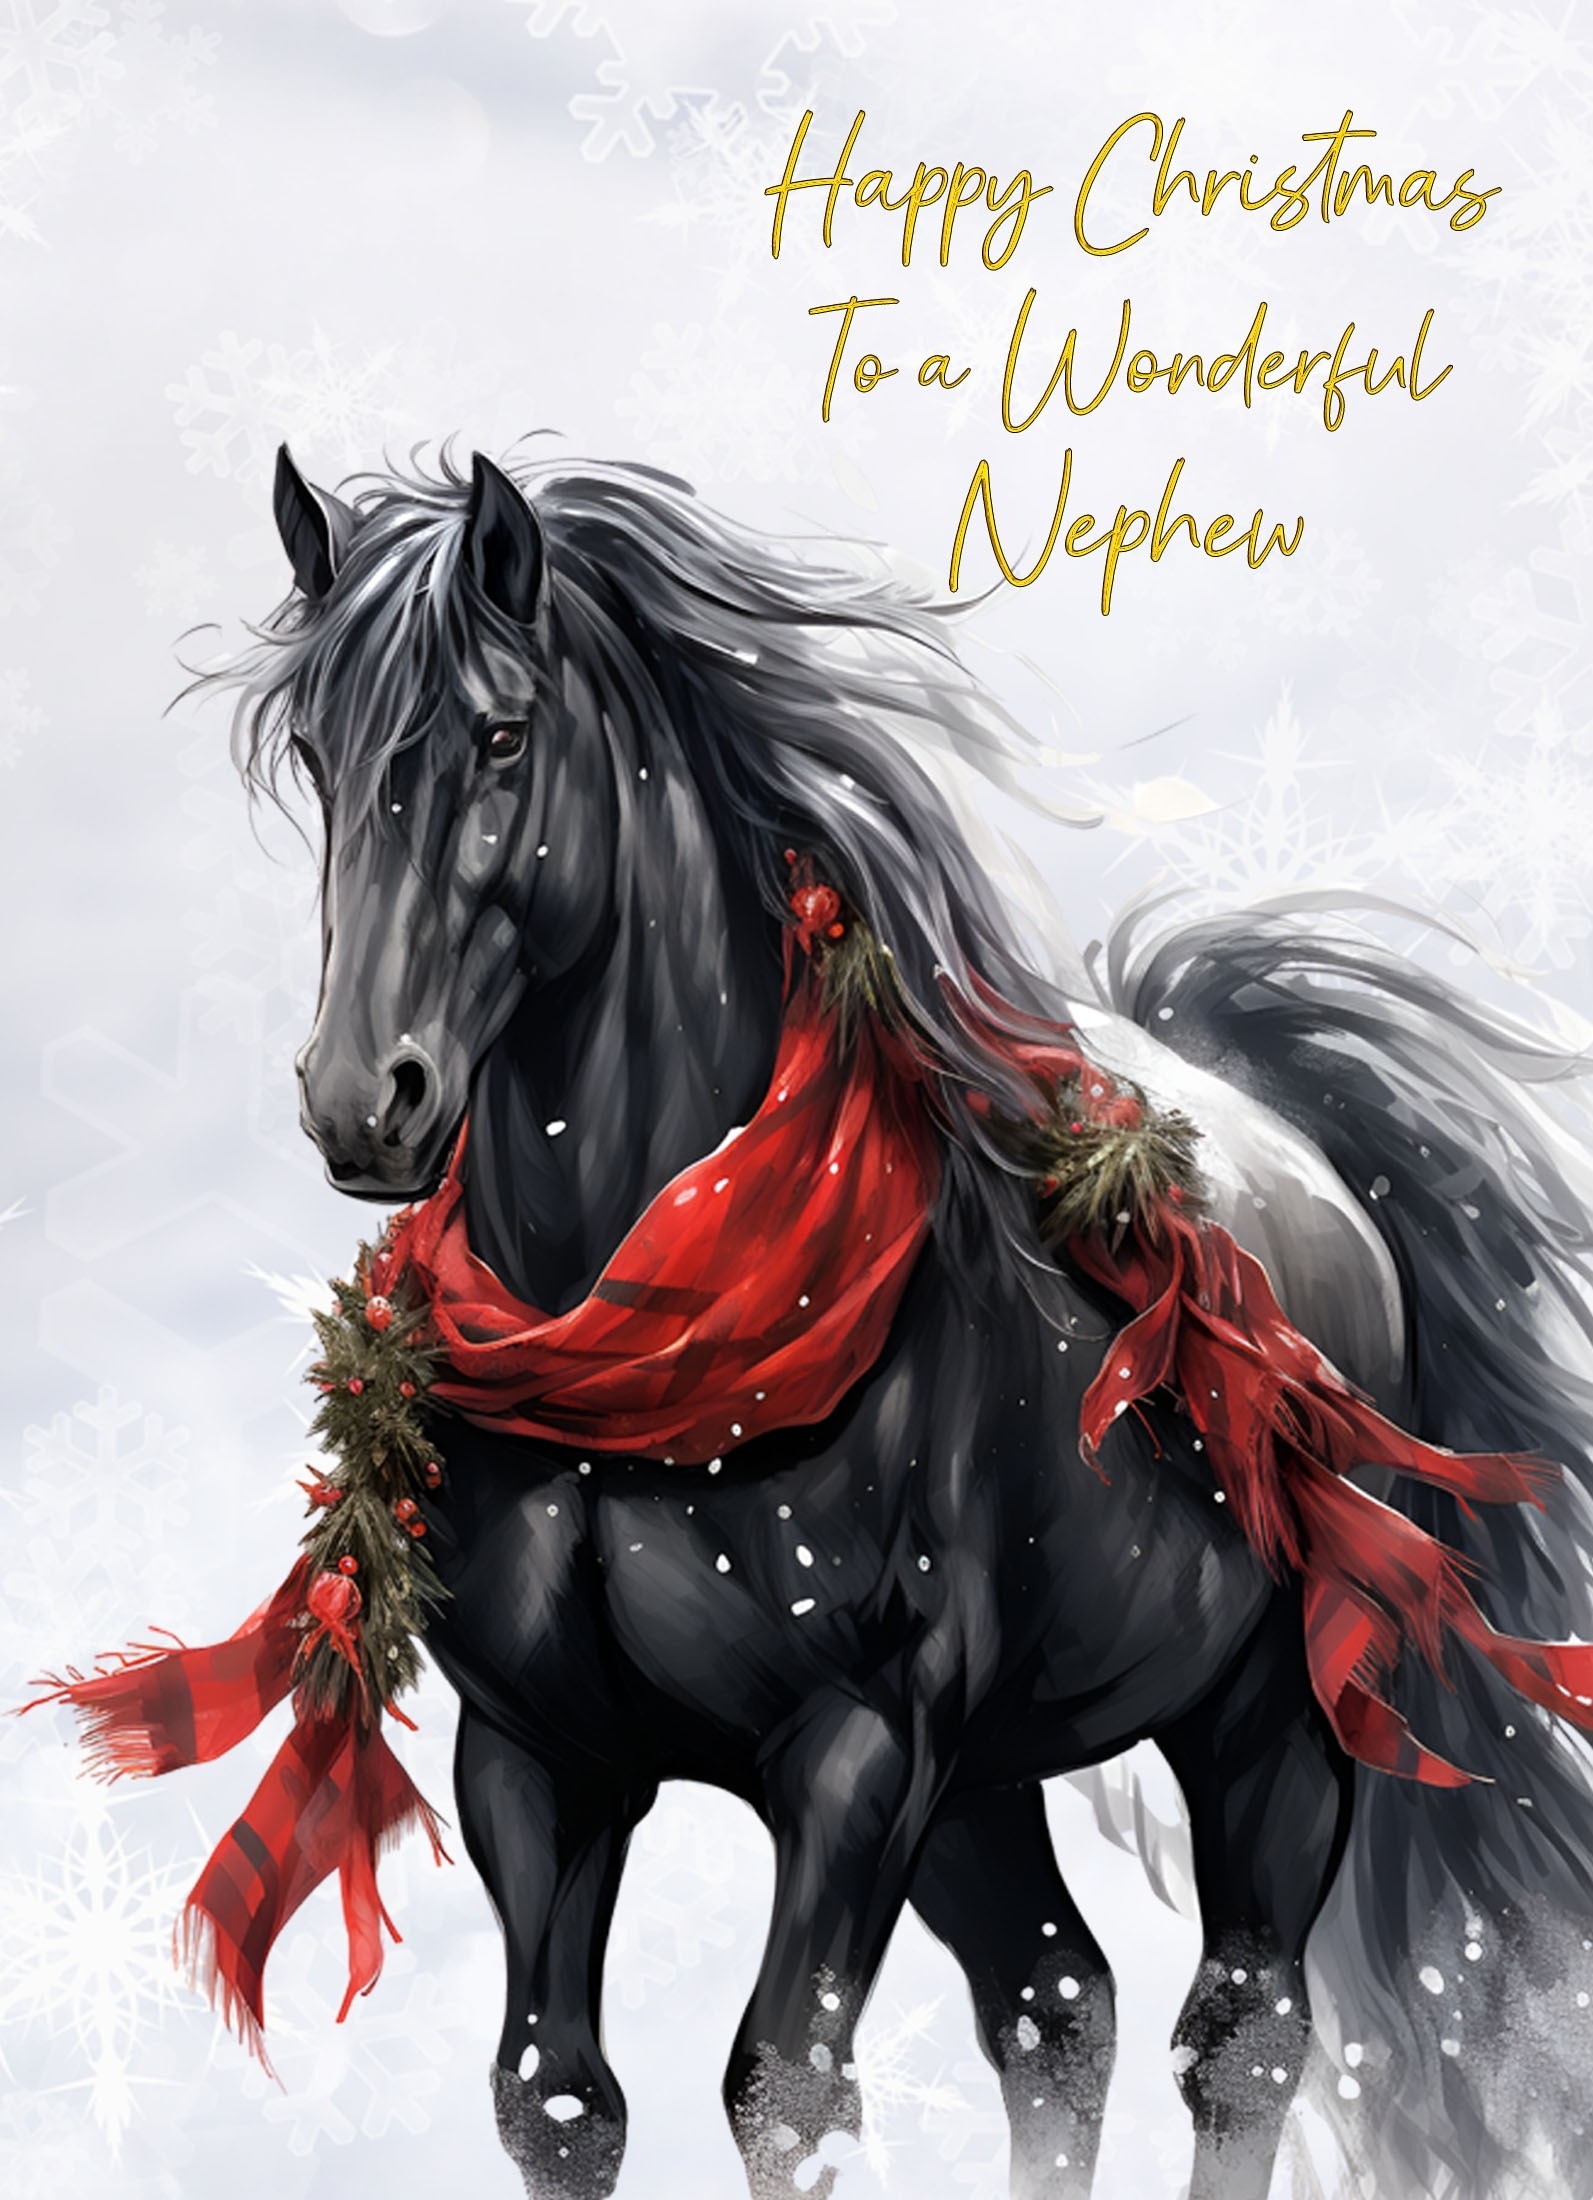 Christmas Card For Nephew (Horse Art Black)